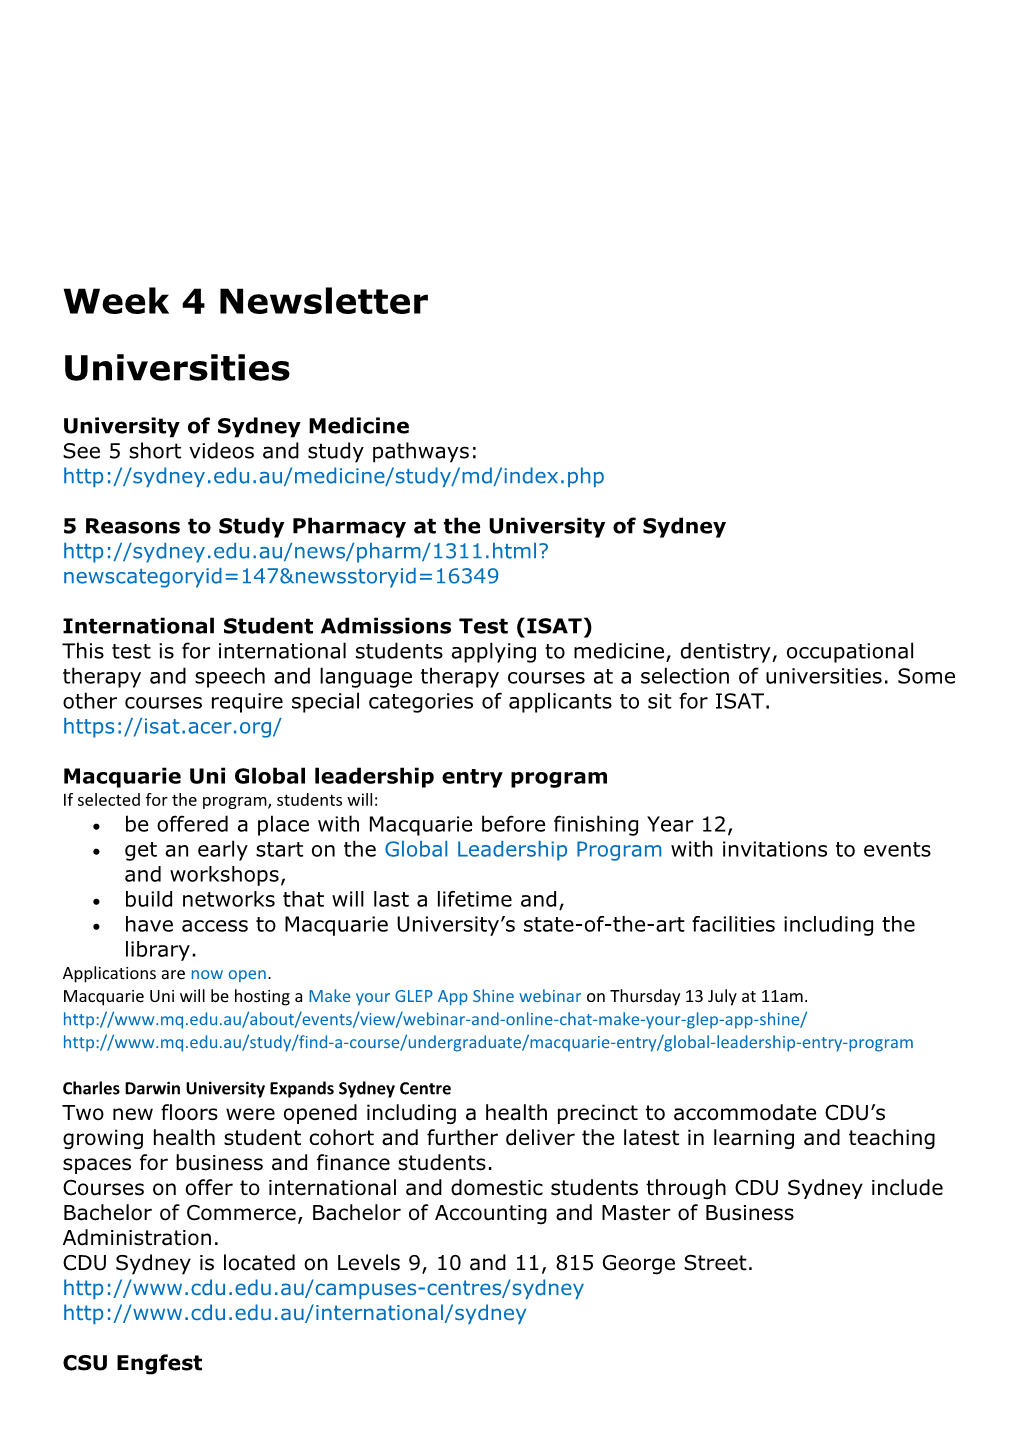 5 Reasons to Study Pharmacy at the University of Sydney